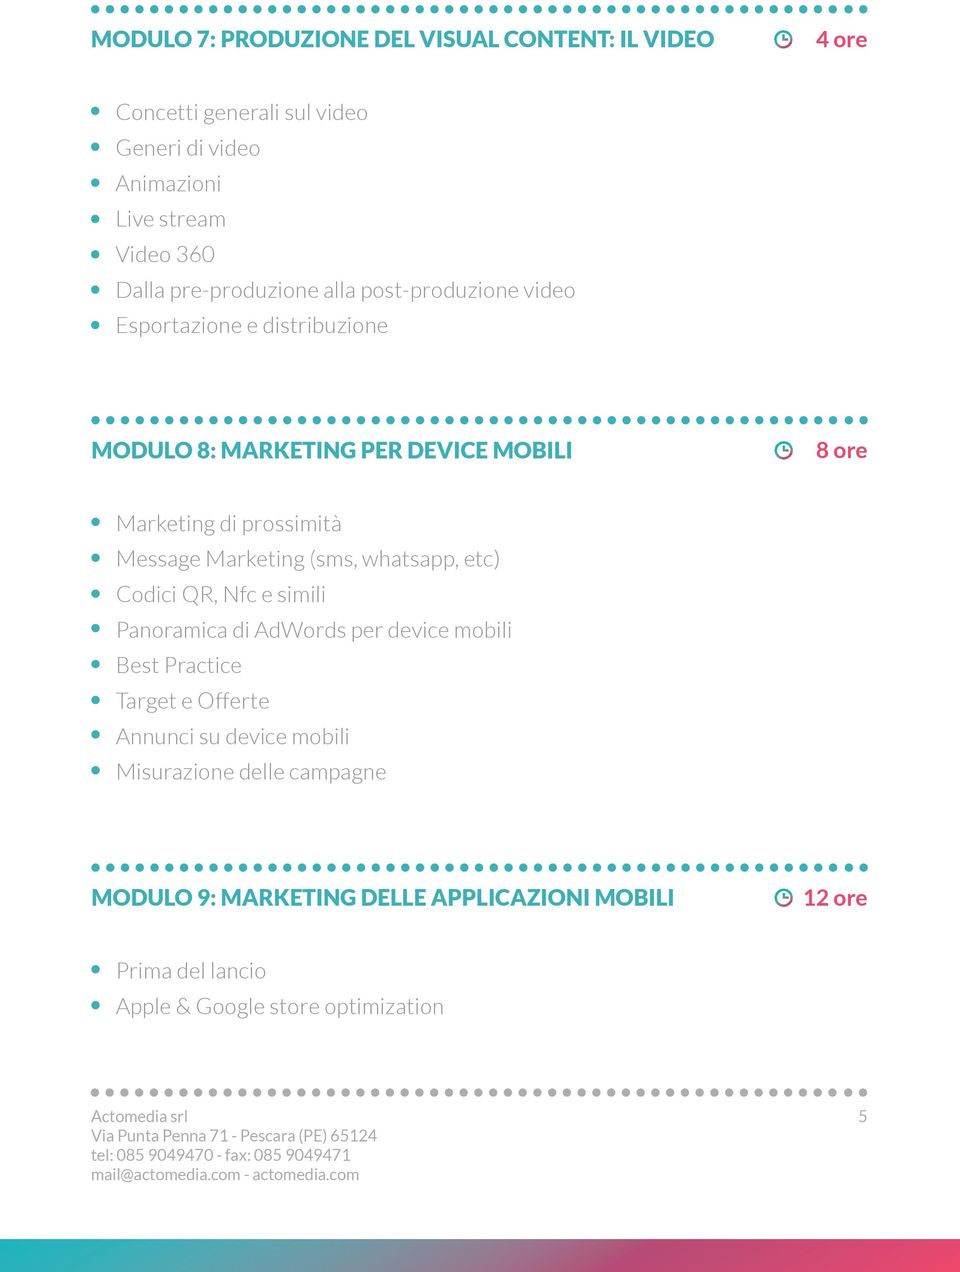 Message Marketing (sms, whatsapp, etc) Codici QR, Nfc e simili Panoramica di AdWords per device mobili Best Practice Target e Offerte